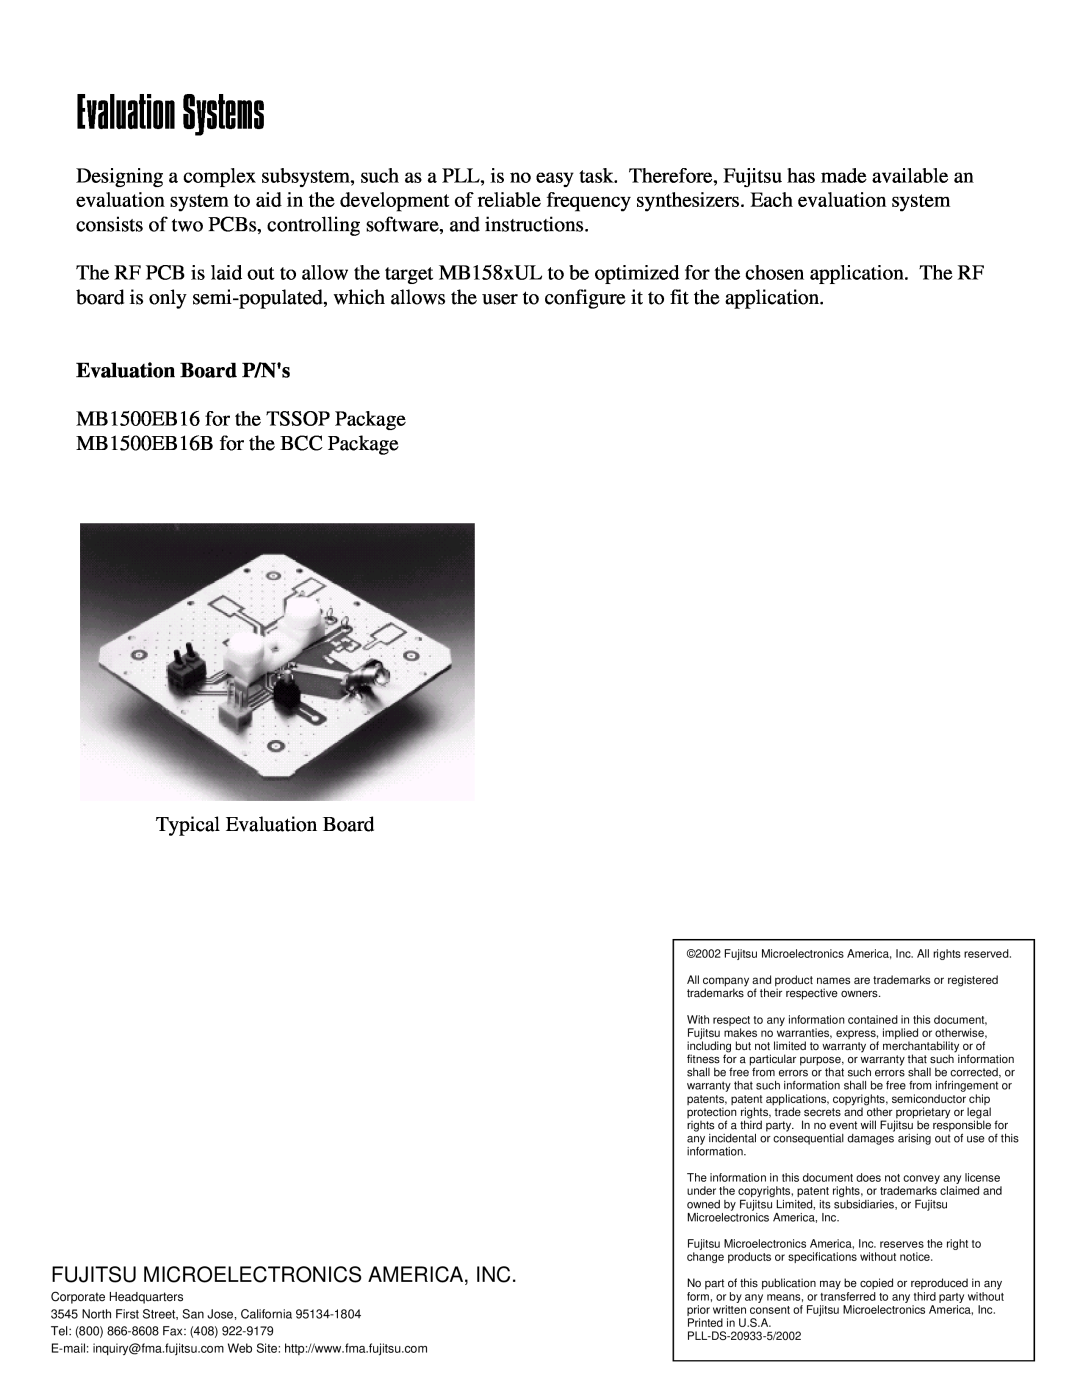 Fujitsu MB15F86UL, FPT-20P-M06, MB15F88UL Evaluation Systems, Evaluation Board P/Ns, Fujitsu Microelectronics America, Inc 